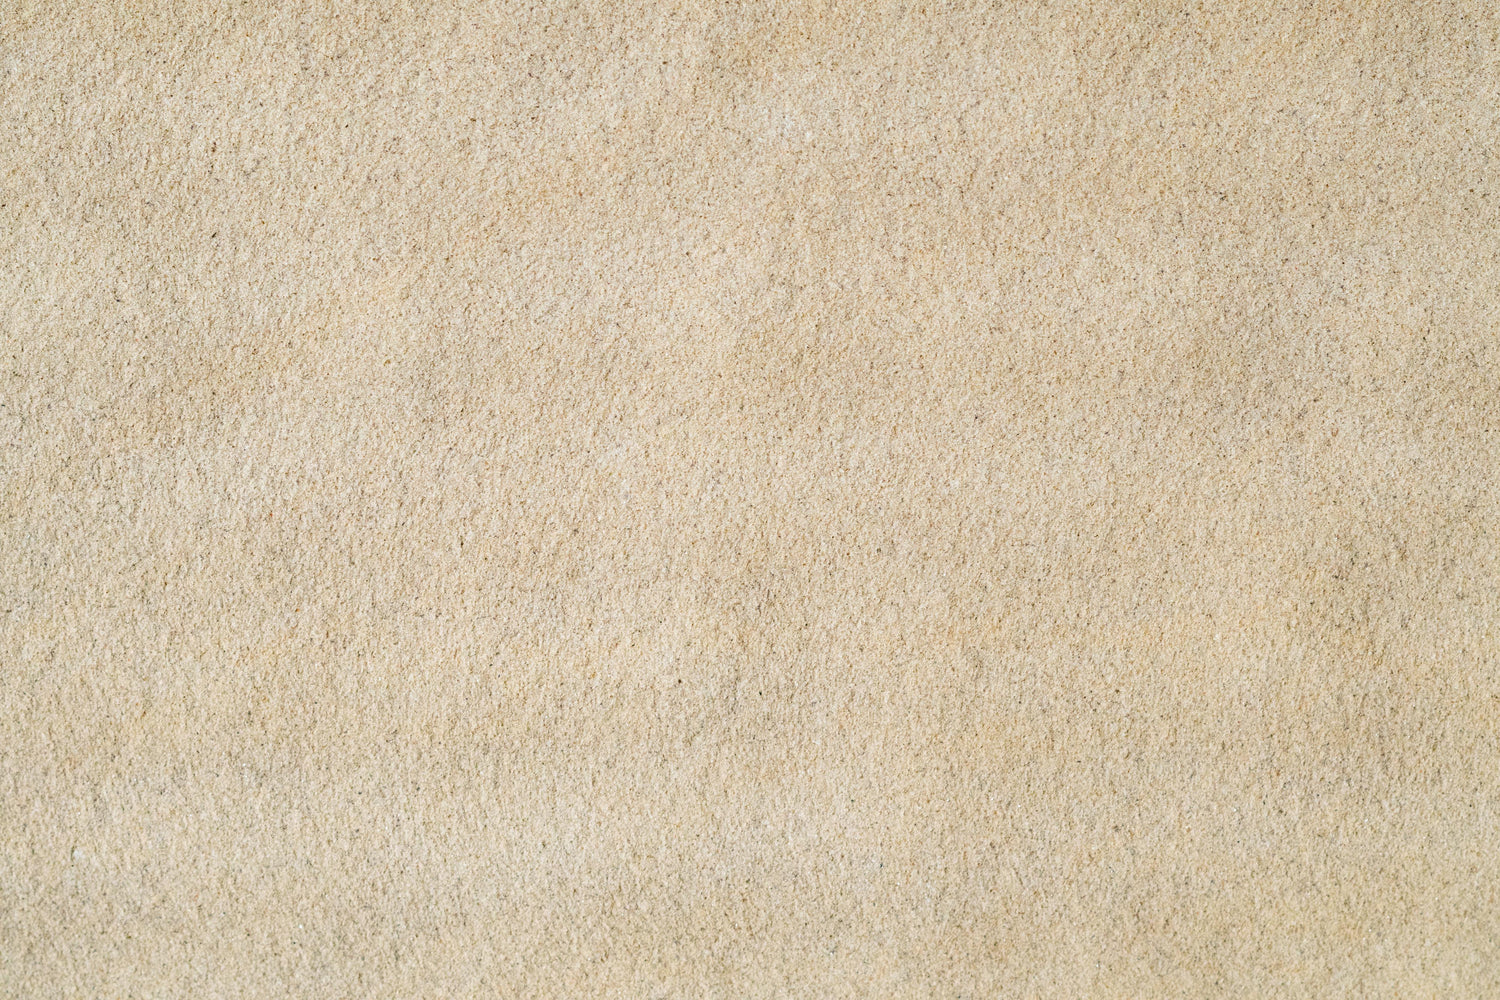 Silk Road Sandstone Tile - 24" x 24" x 3/4" Sandblasted